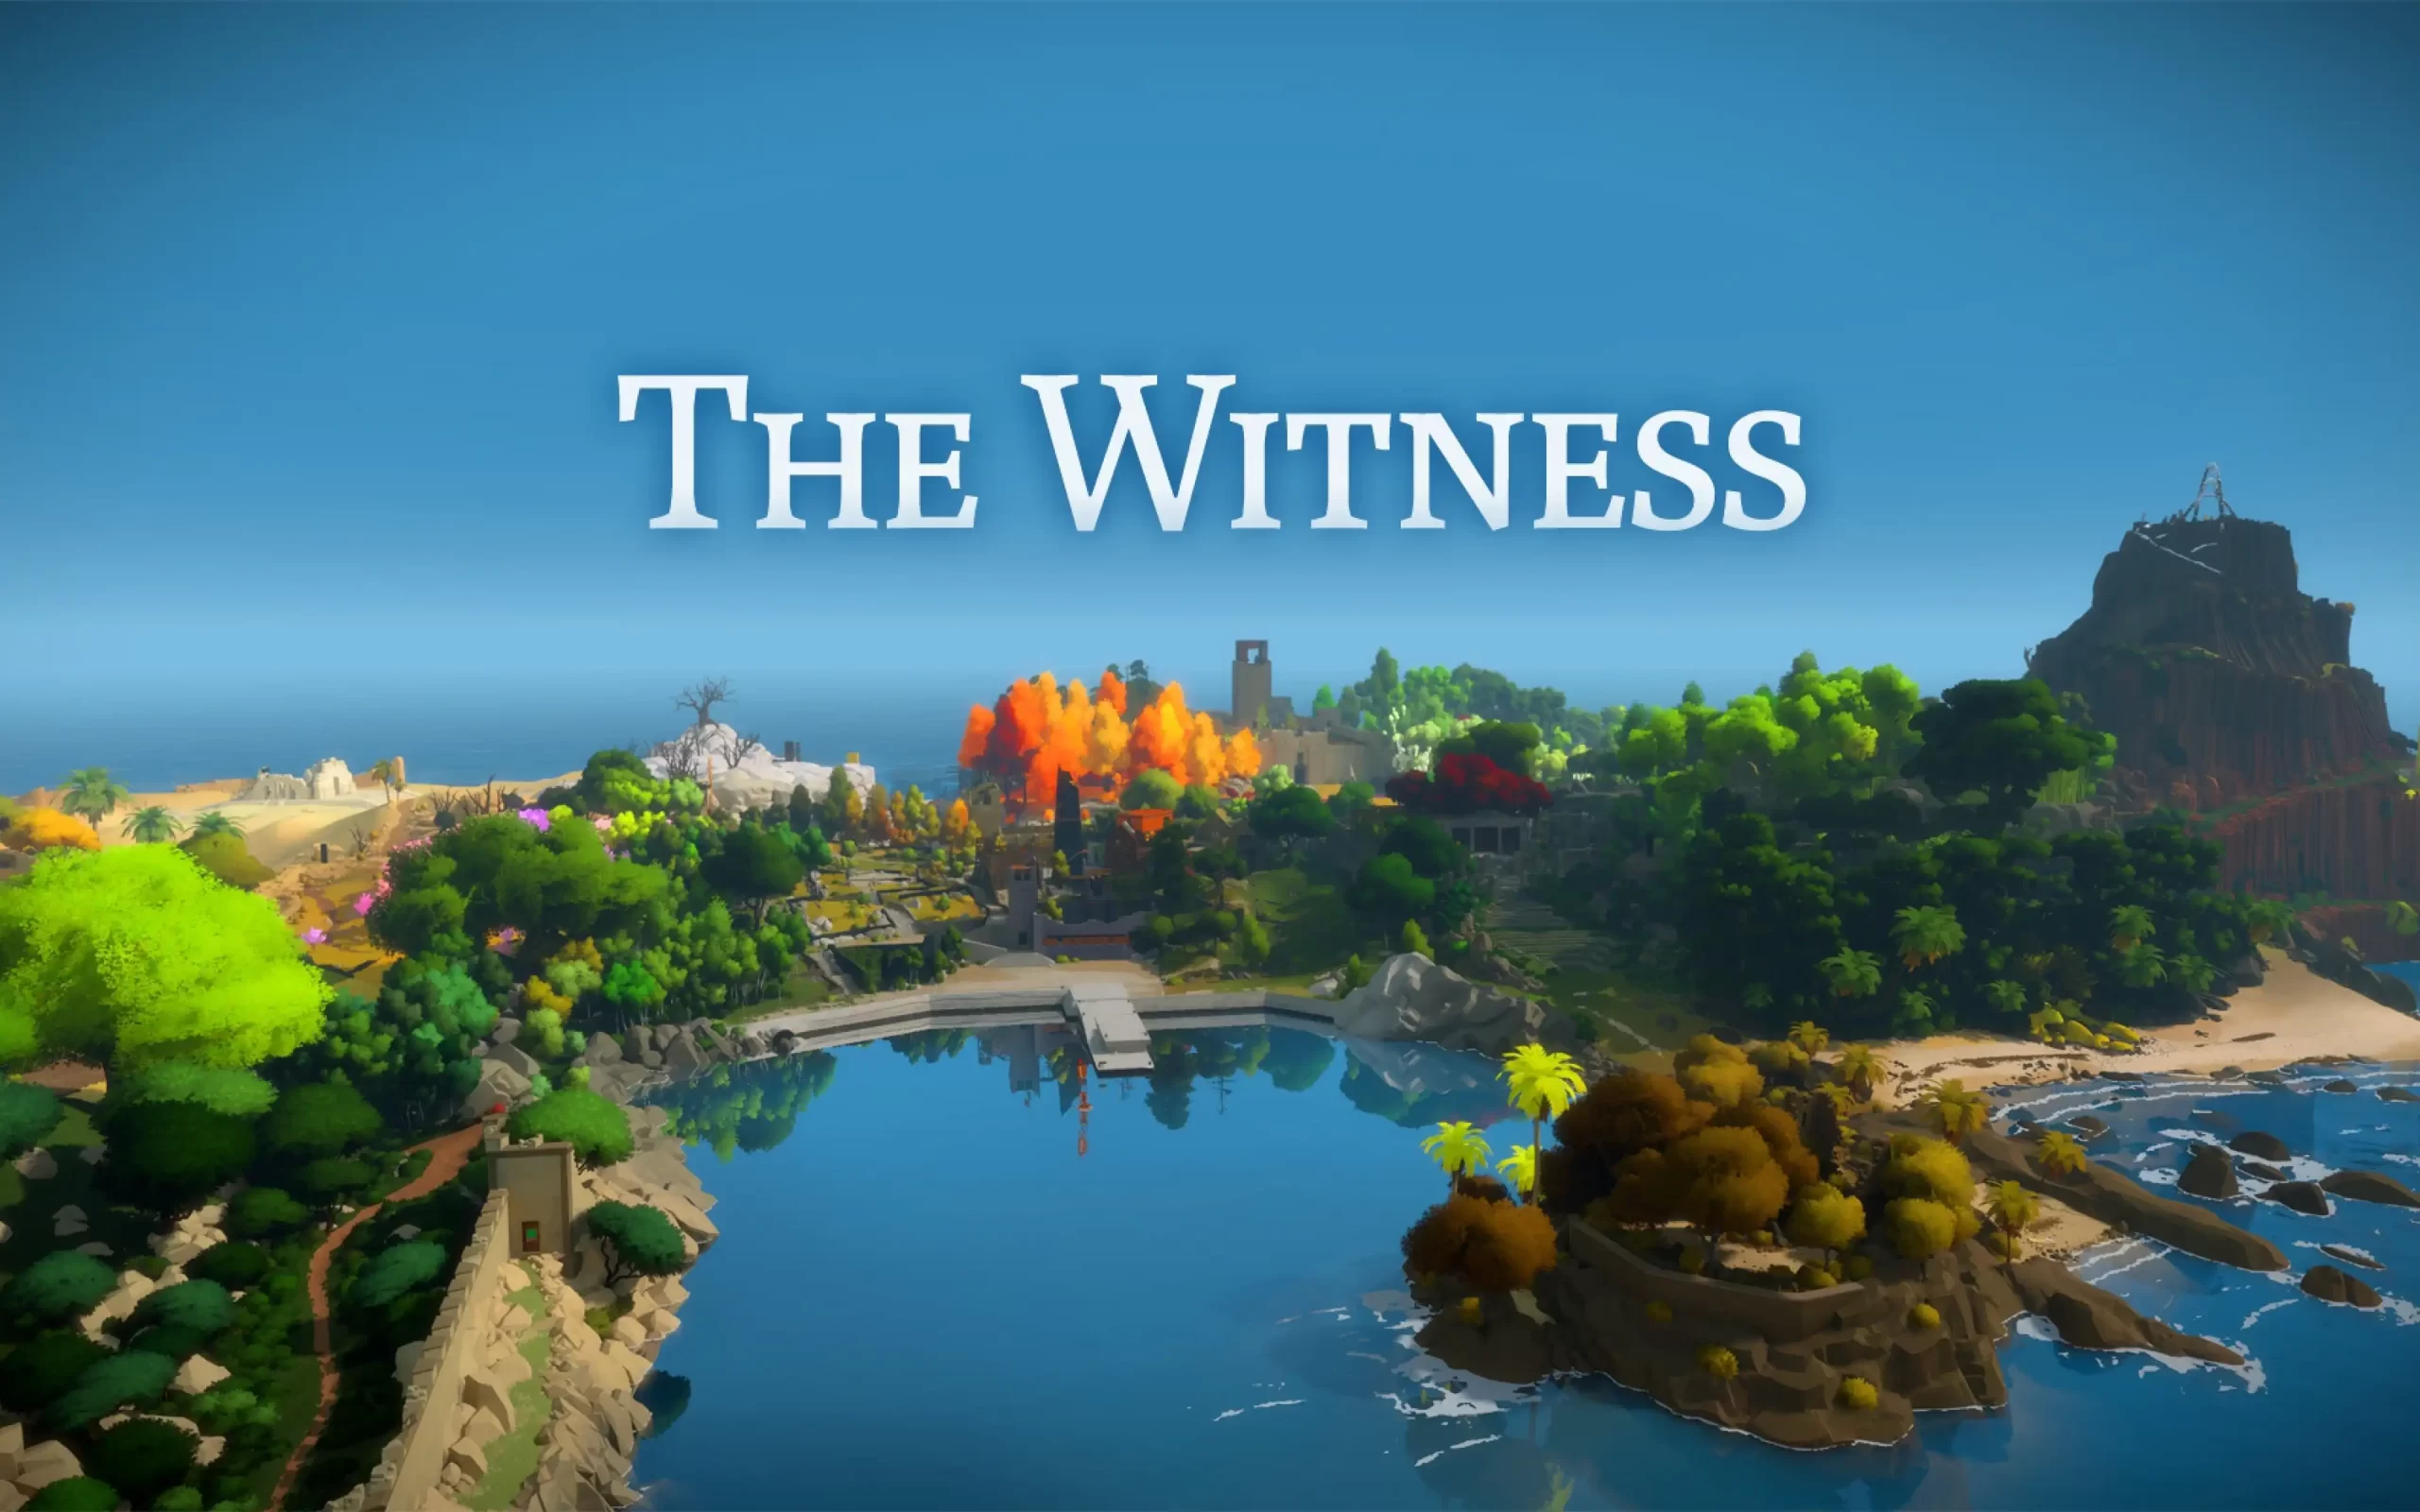 The Witness – остров загадок